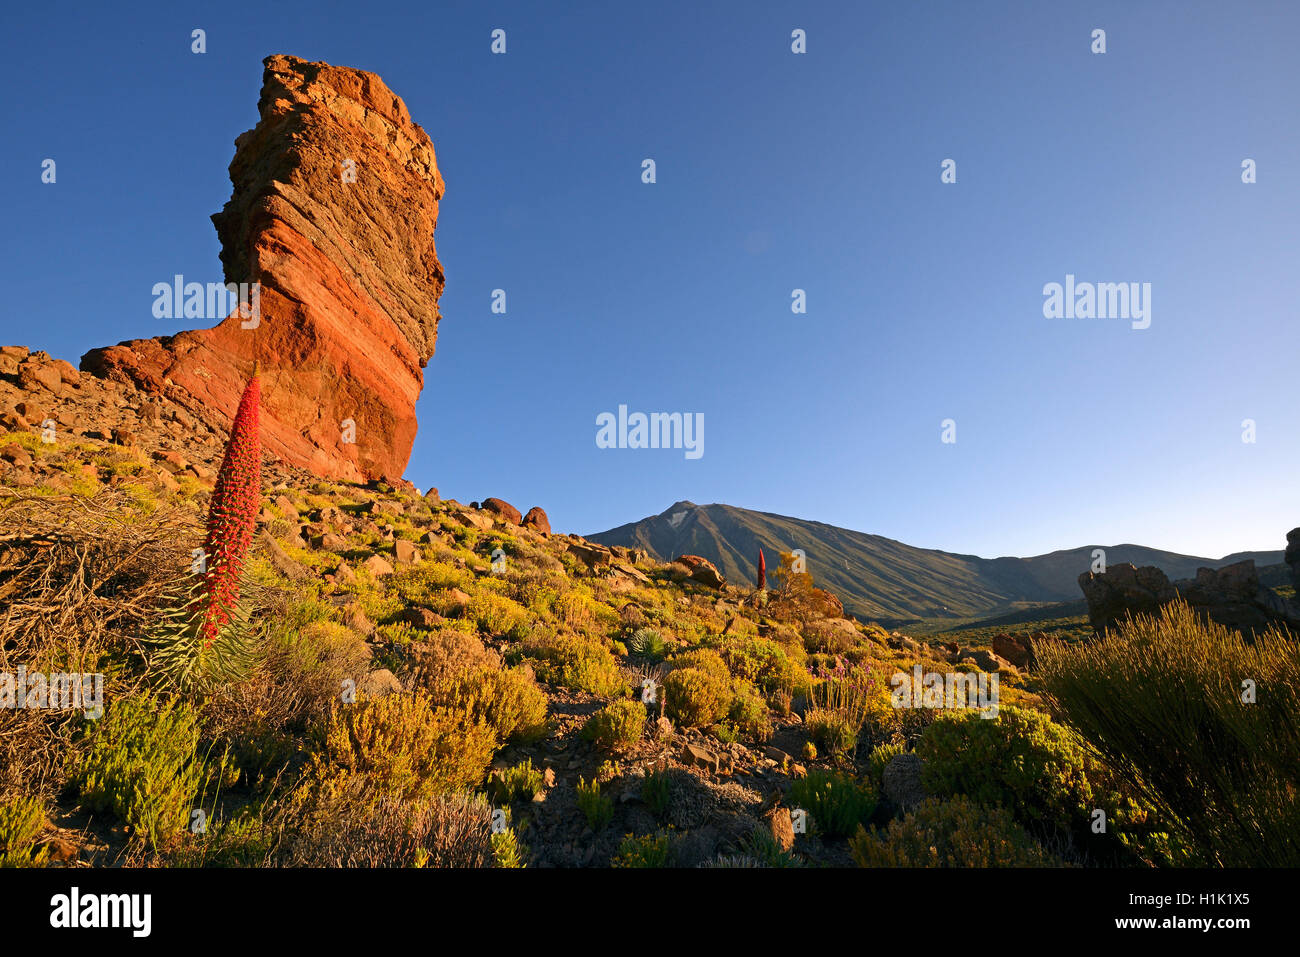 Roques de Garcia, il Pico del Teide, Las Canadas, Wildprets Natternkopf (Echium wildpretii), Teide-Nationalpark, UNESCO Weltnaturerbe, Teneriffa, Spanien Foto Stock